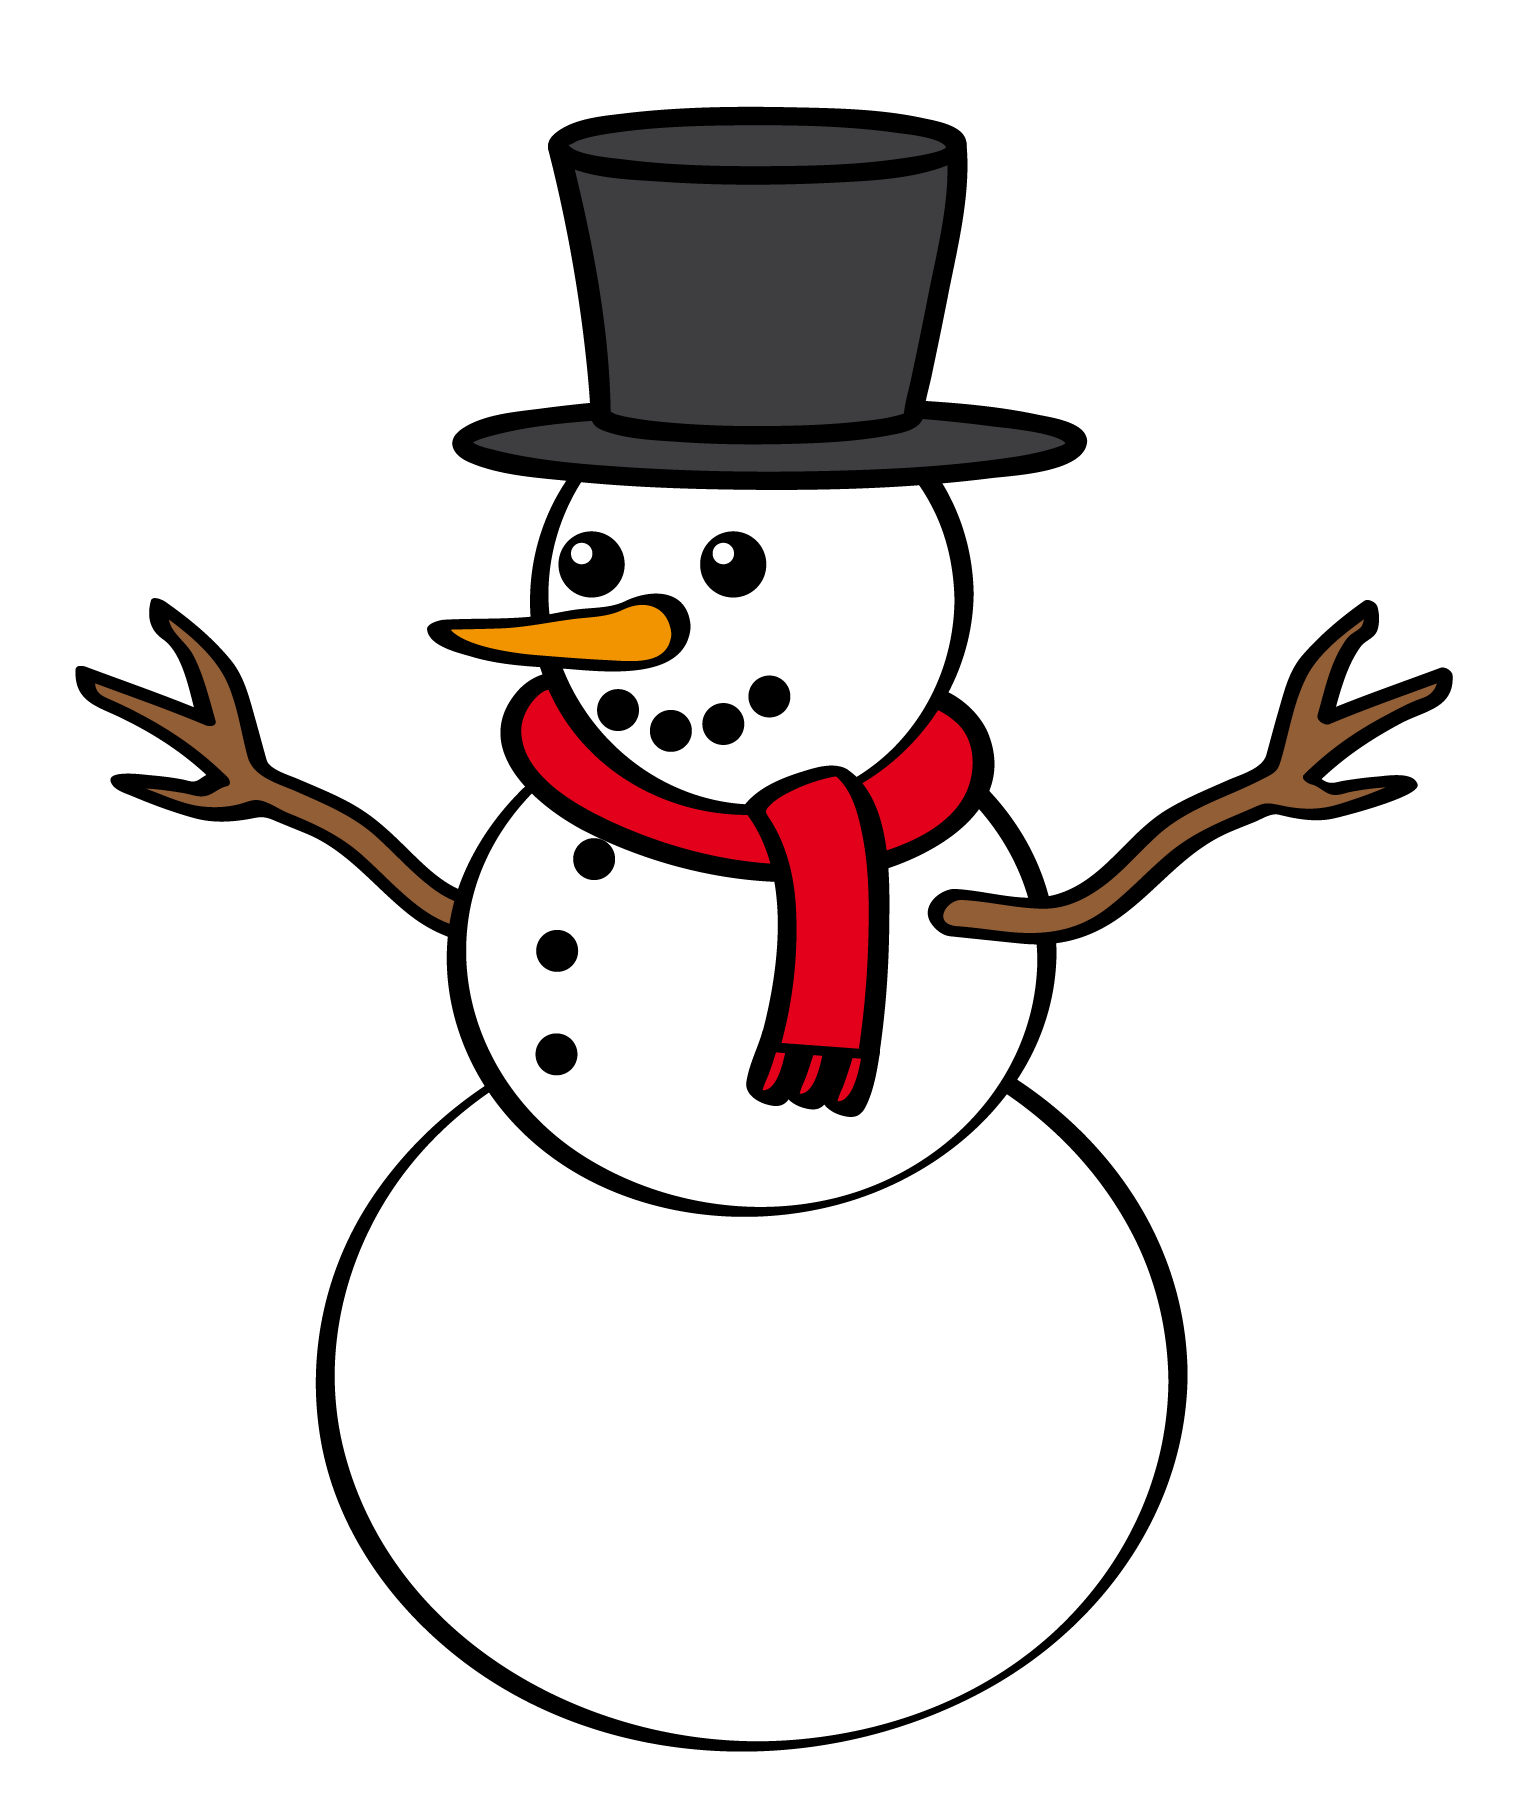 Снеговик PNG Image